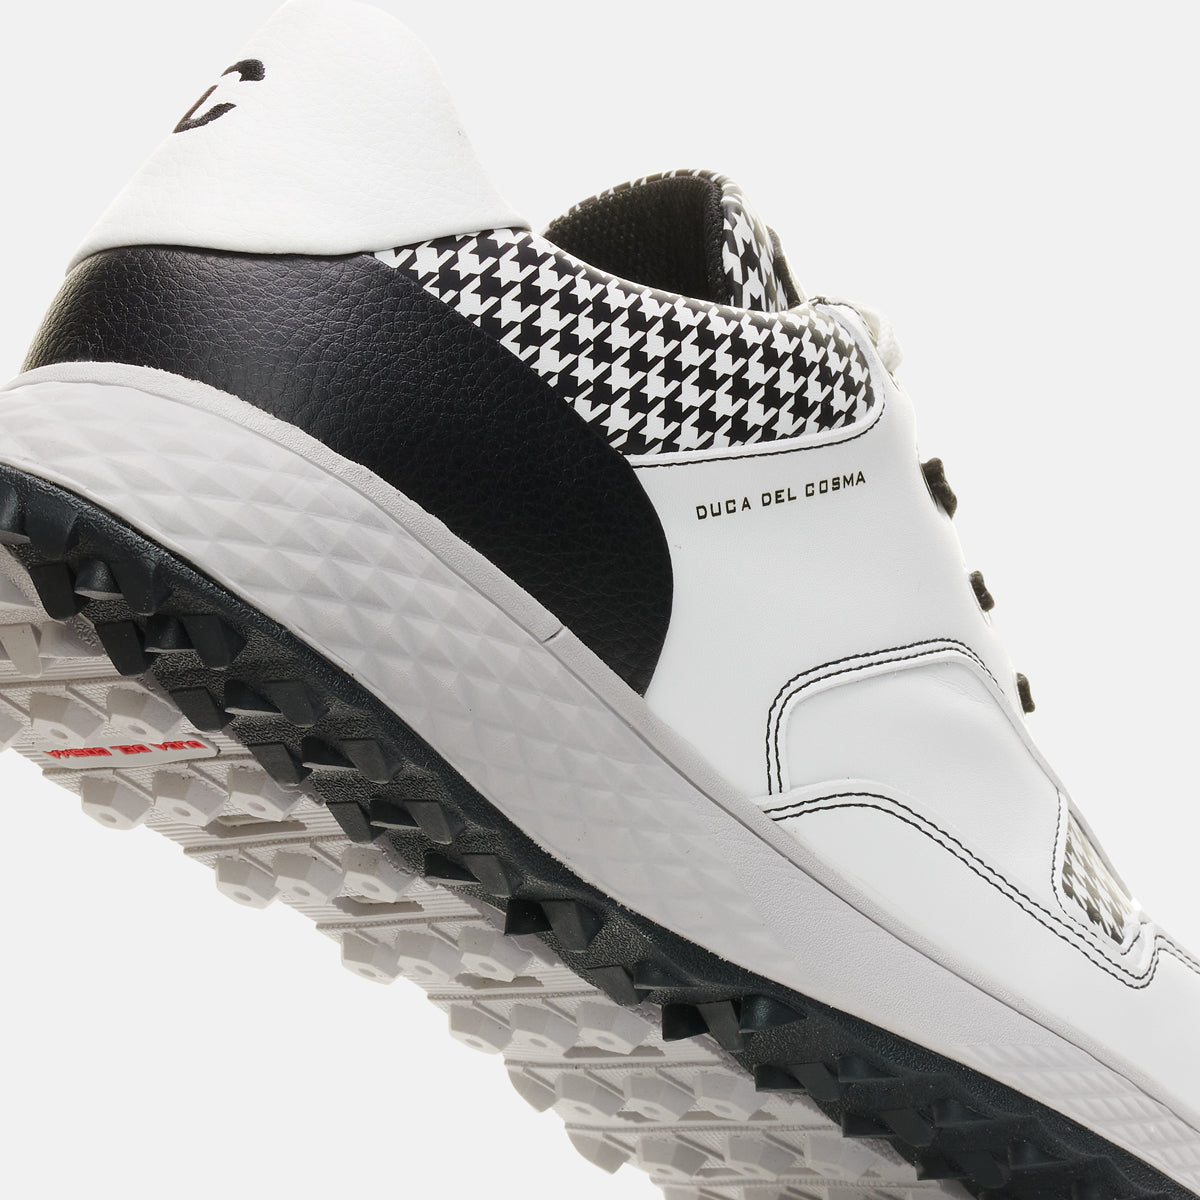 Pagani - Zapatos de Golf Hombre Blanco/Negro